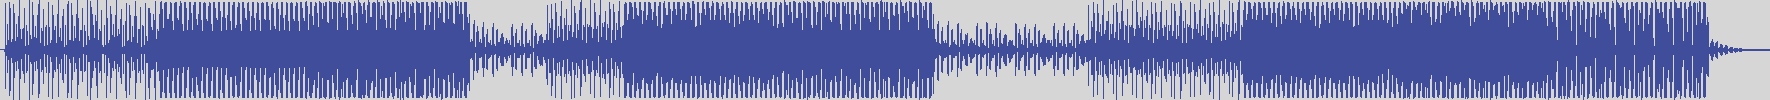 nf_boyz_records [NFY067] Koompa - Skaleta [Original Mix] audio wave form